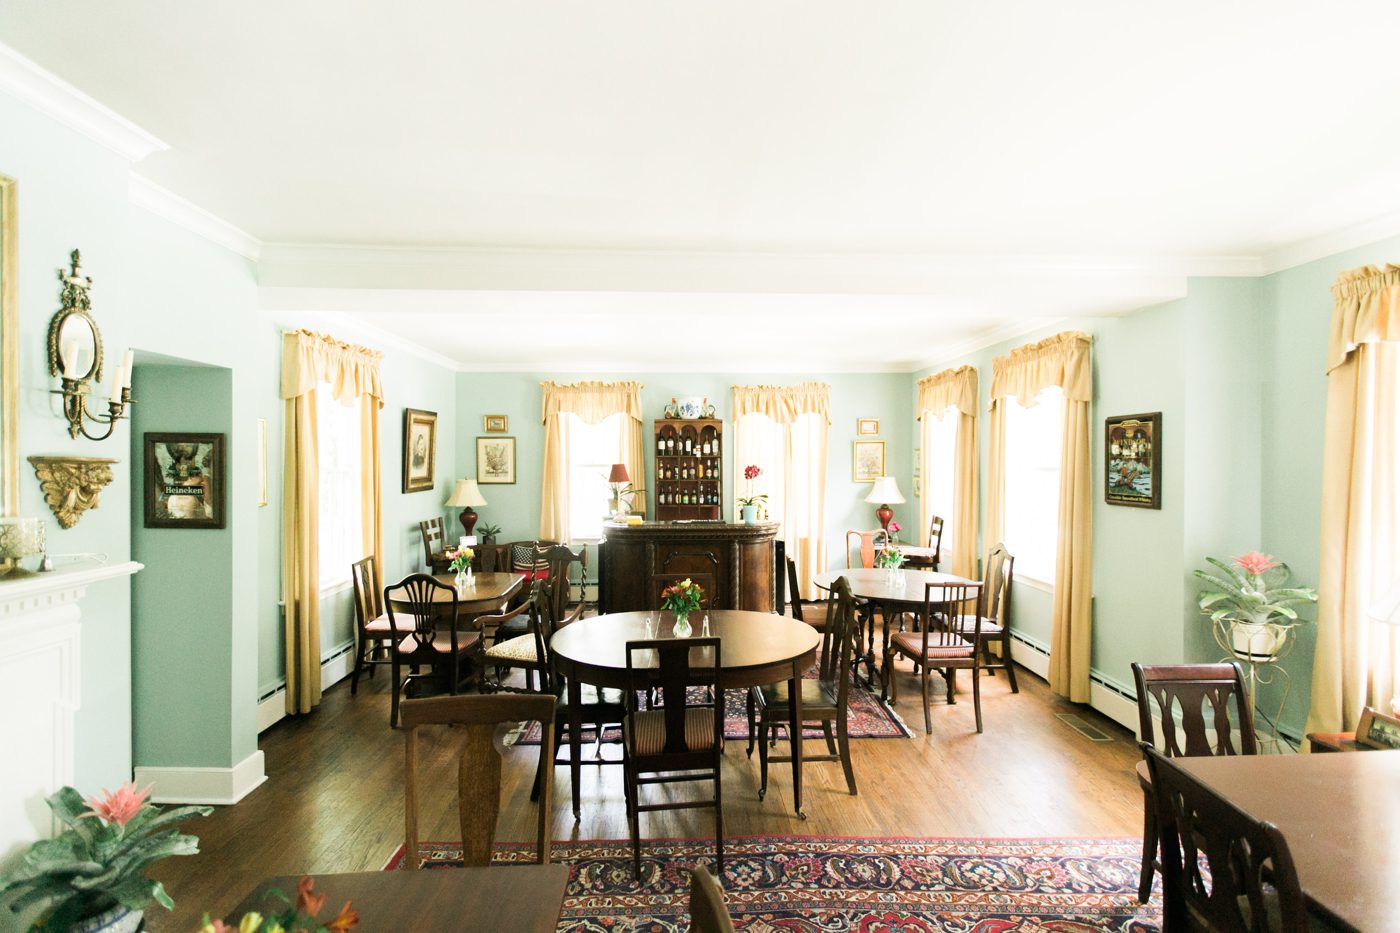 Historic Oak Manor Inn located in Hartsville SC